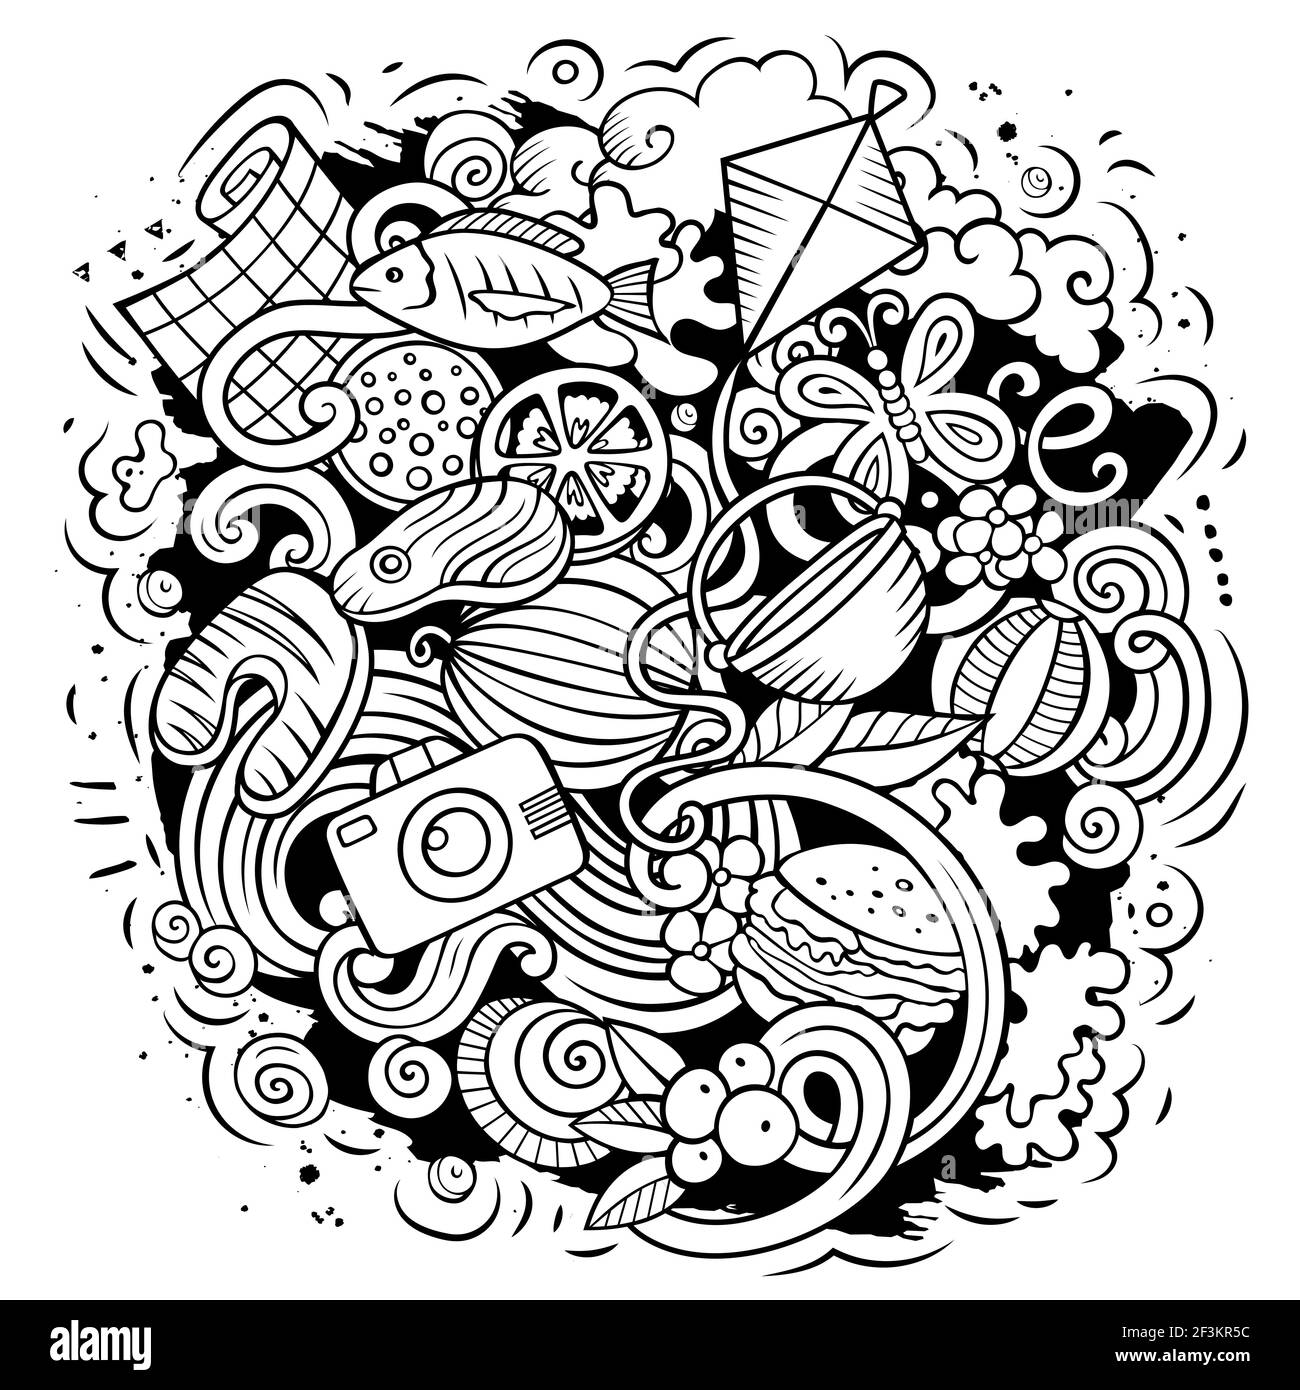 Picknick Cartoon Doodle Illustration. Lustige kreative Vektor Hintergrund. Camping Elemente und Objekte. Stock Vektor